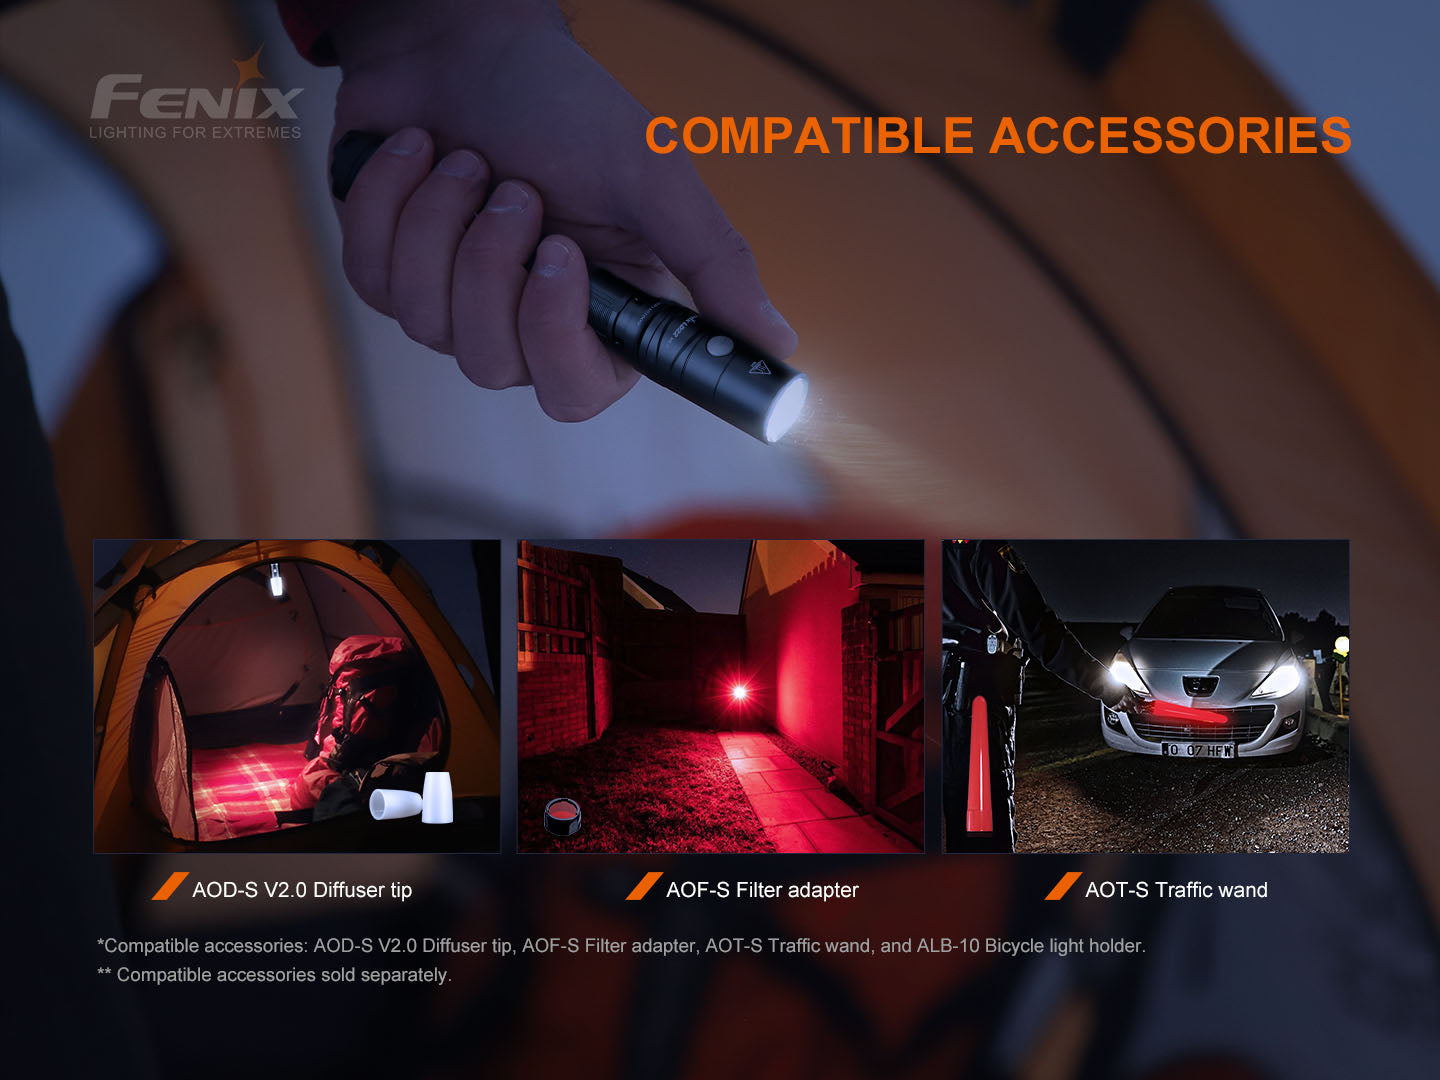 Fenix LD22 V2.0 Compact Rechargeble LED Flashlight